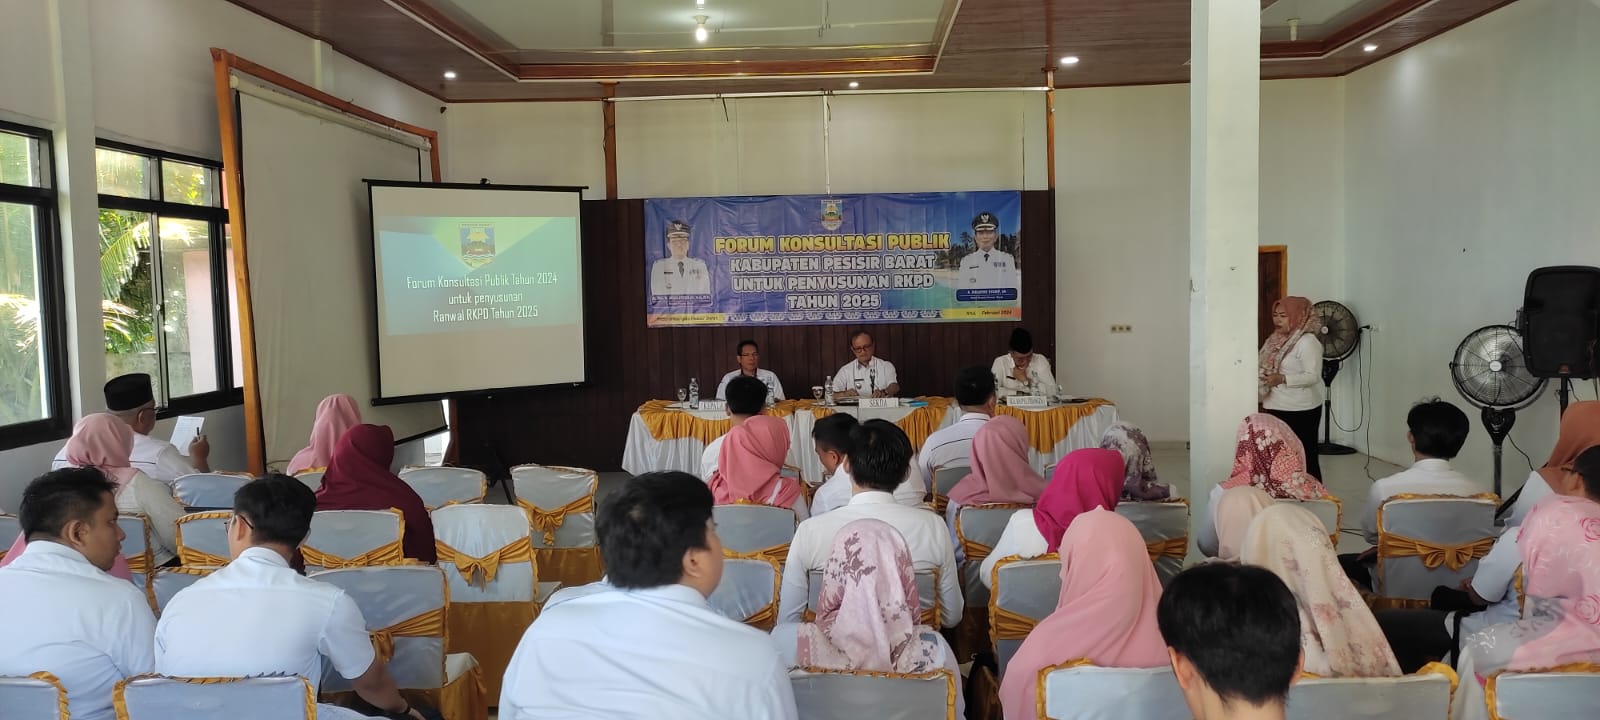 Pemkab Pesisir Barat Gelar Forum Komunikasi Publik, Bahas Penyusunan Rencana Awal RKPD 2025